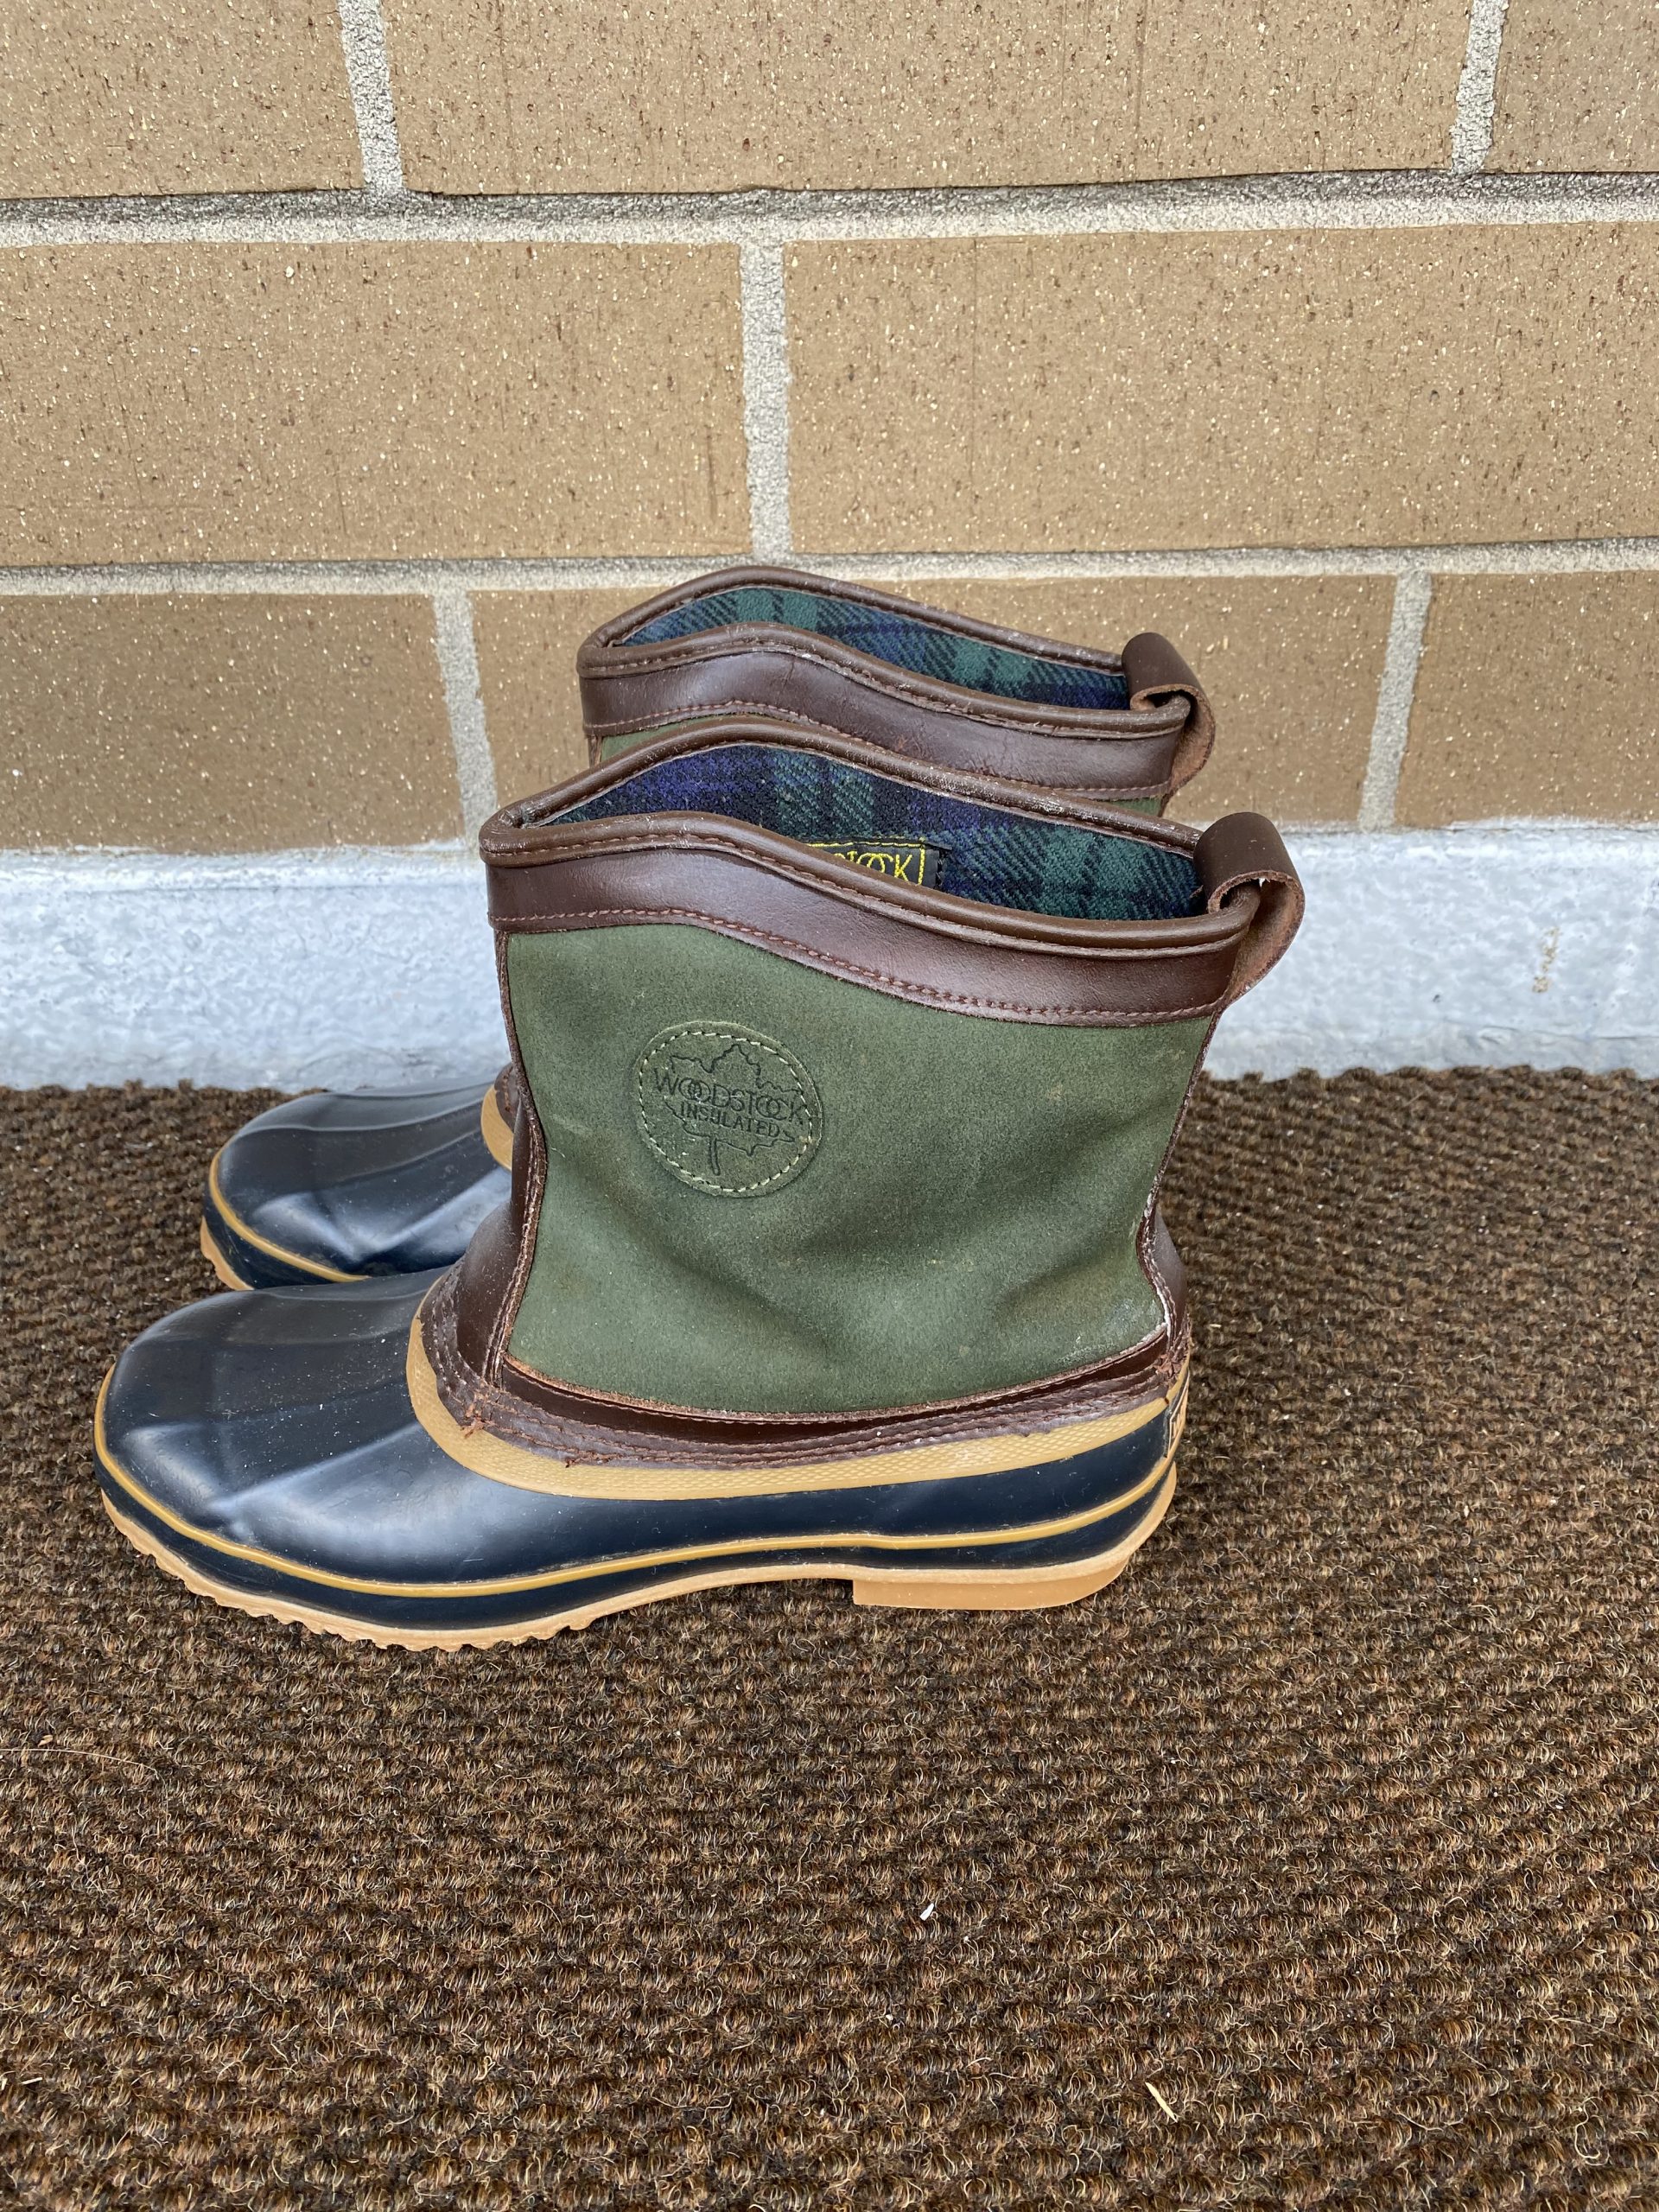 Women’s Flannel-Lined Duck (Barn) Boots